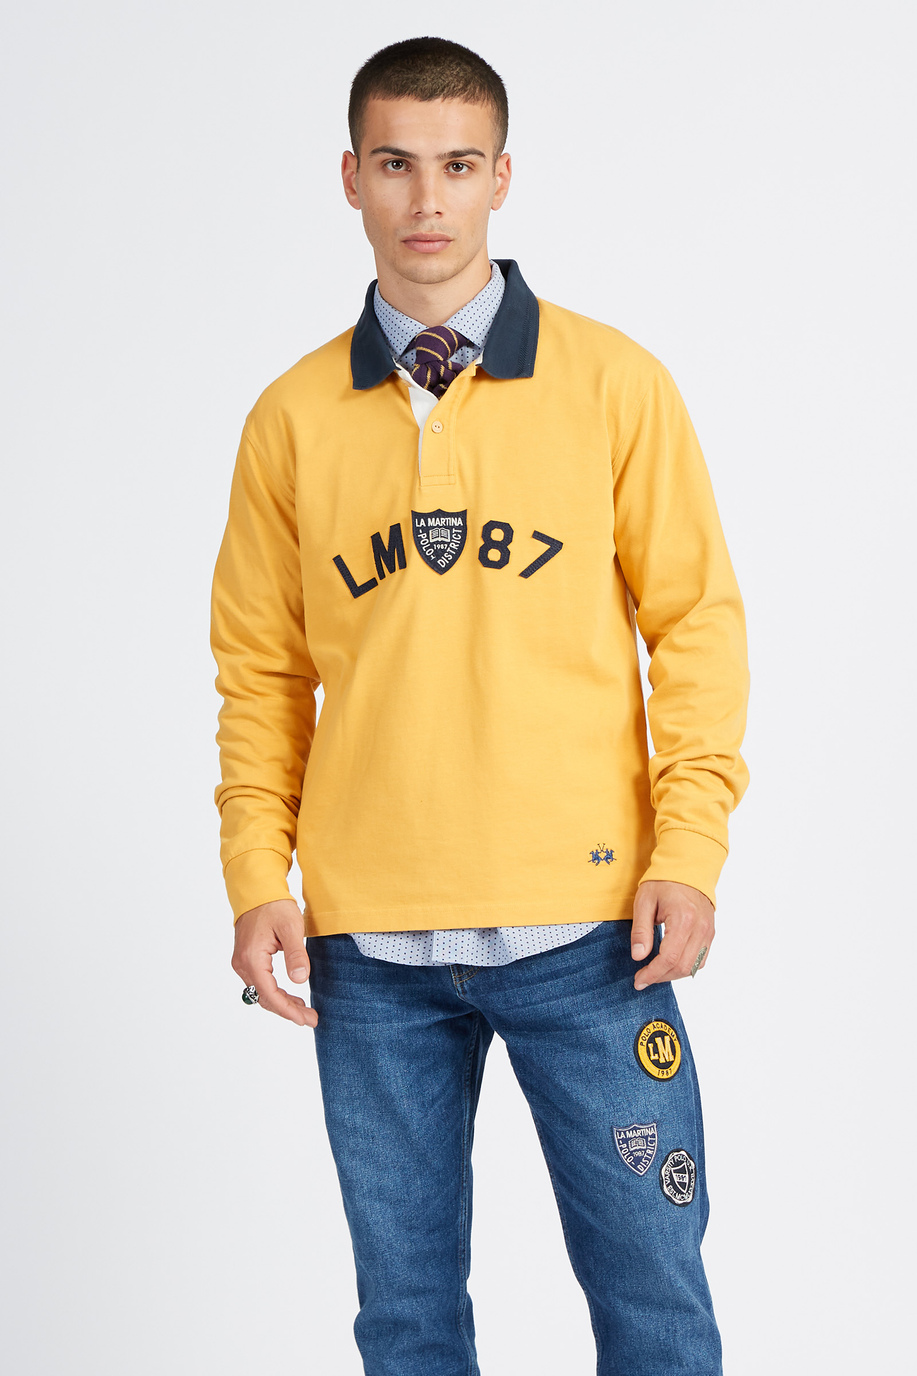 Polo Academy Herren-Langarm-Poloshirt mit kleinem Kontrastkragen-Logo - Vardis - Polo Academy | La Martina - Official Online Shop